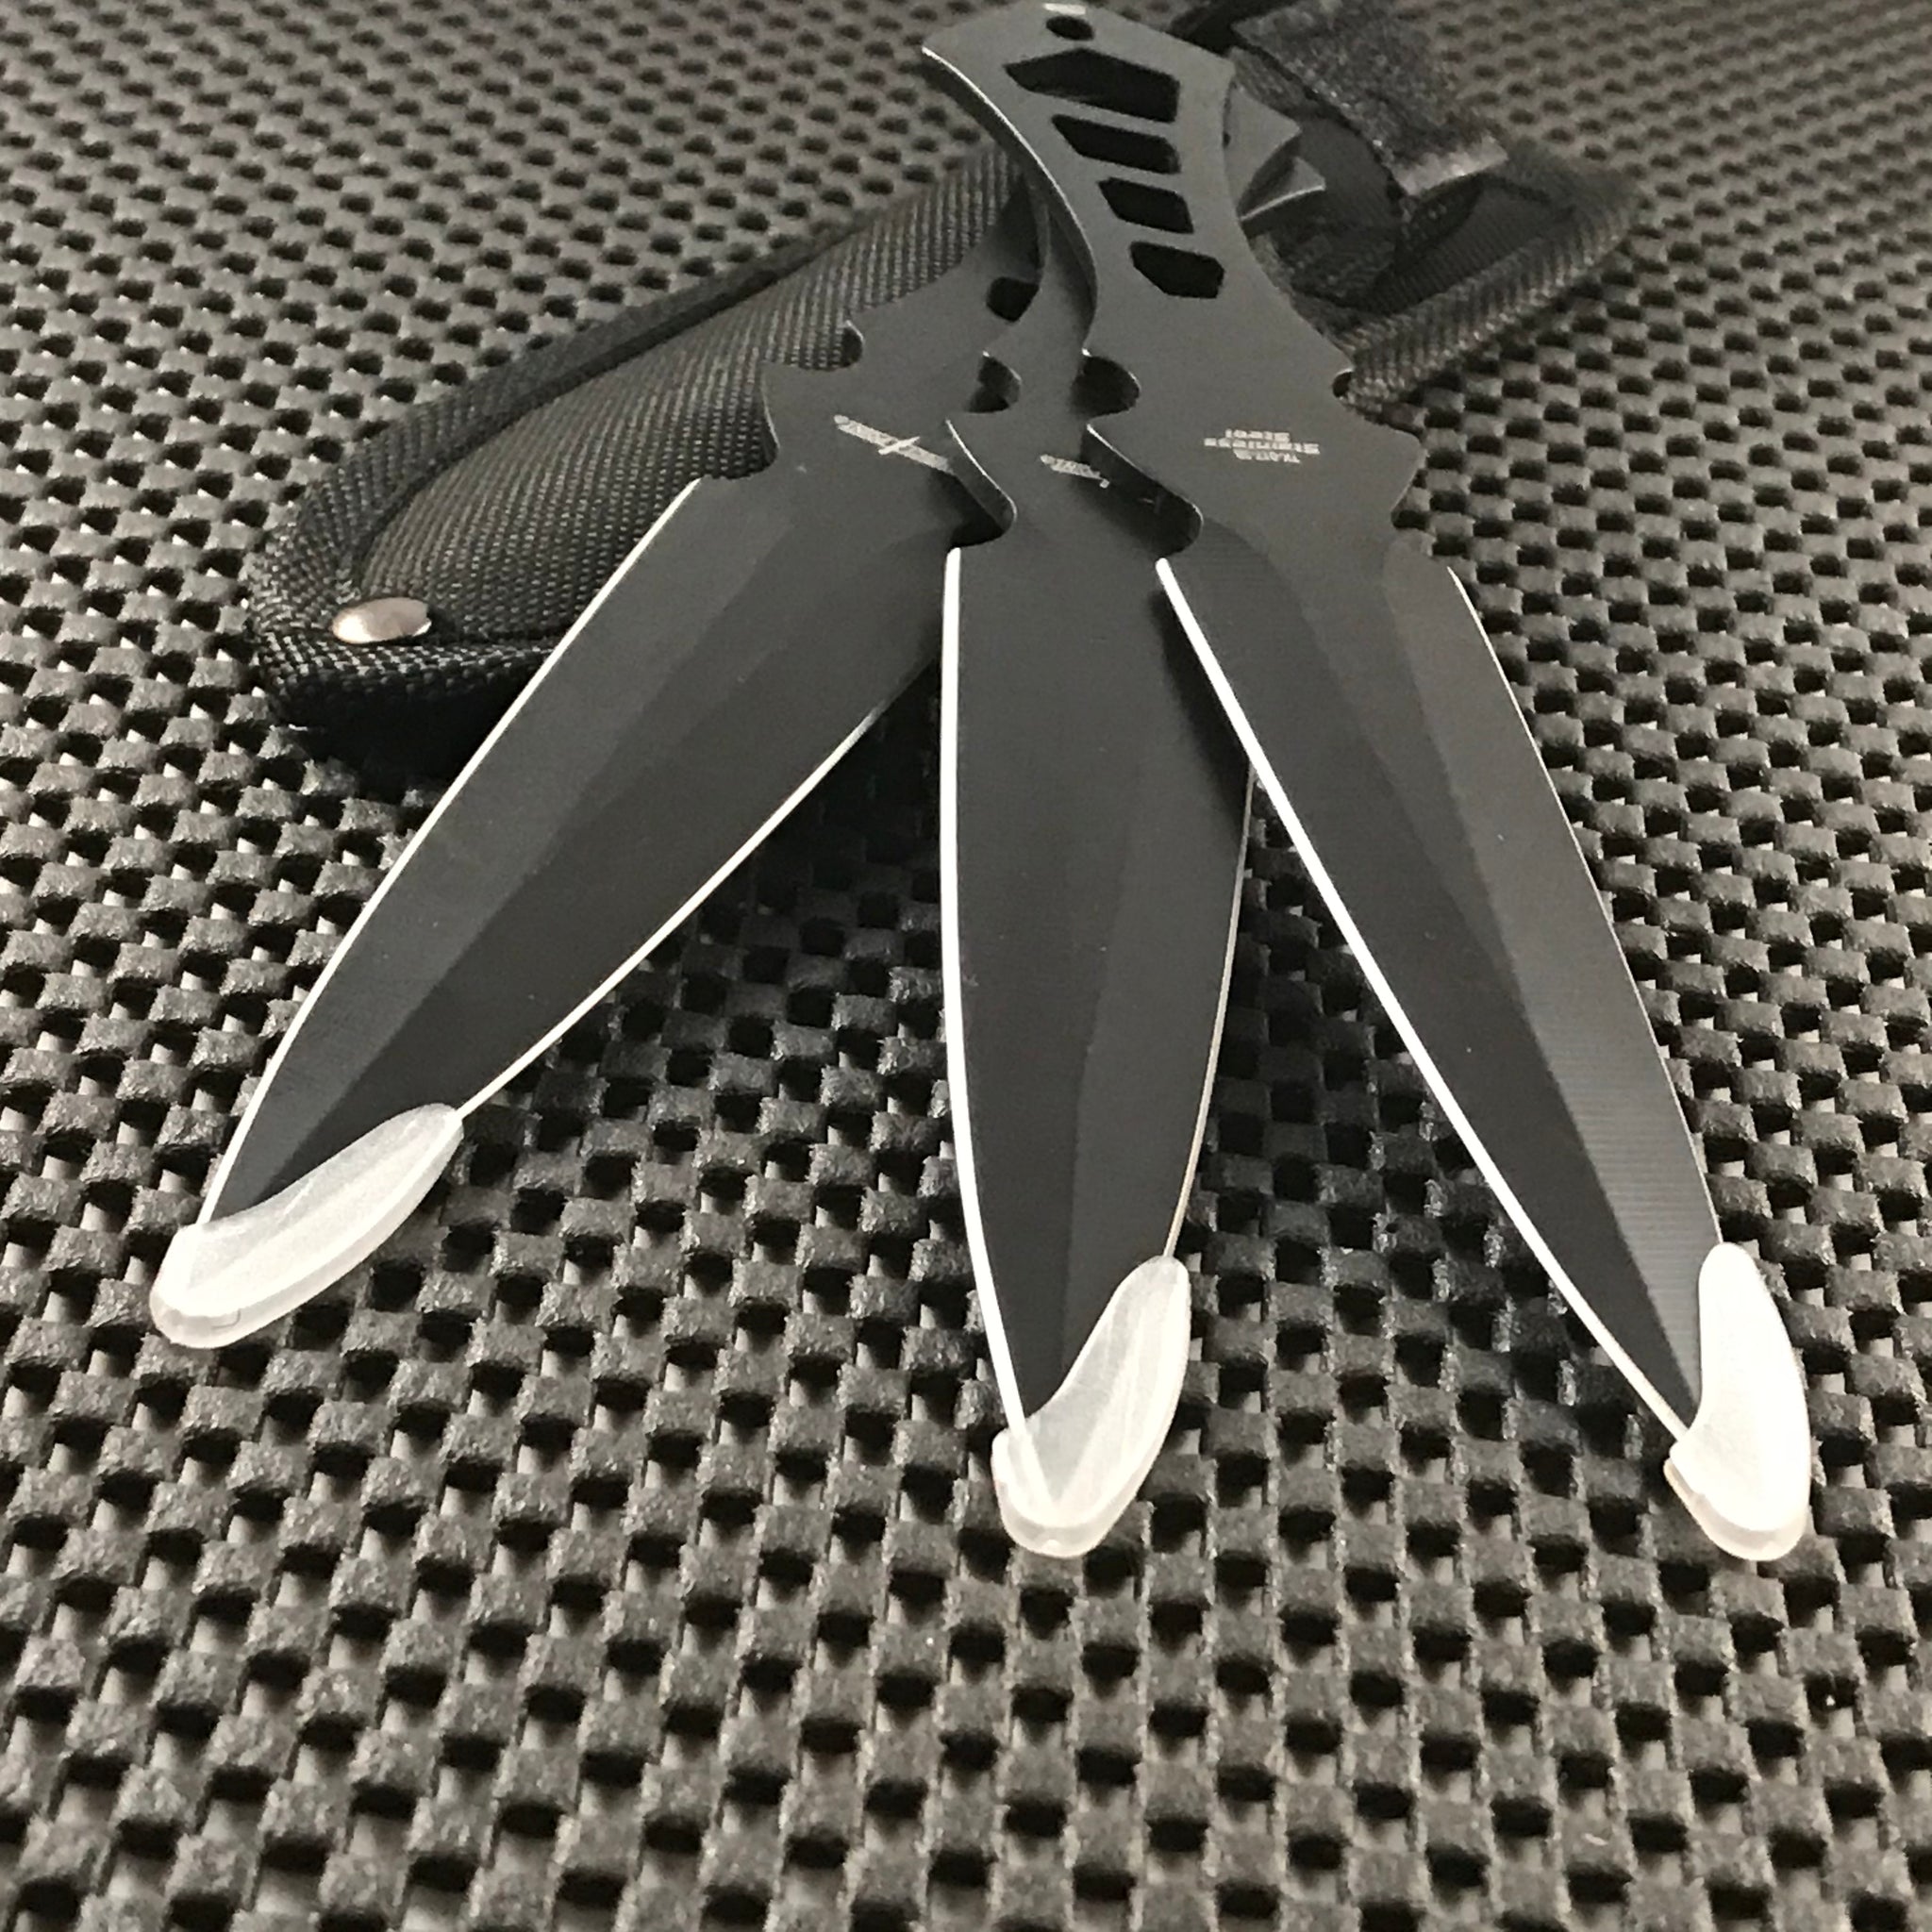 3PC 6.5 Double Edged BLACK Technicolor NINJA KUNAI KNIFE SET OUTDOOR